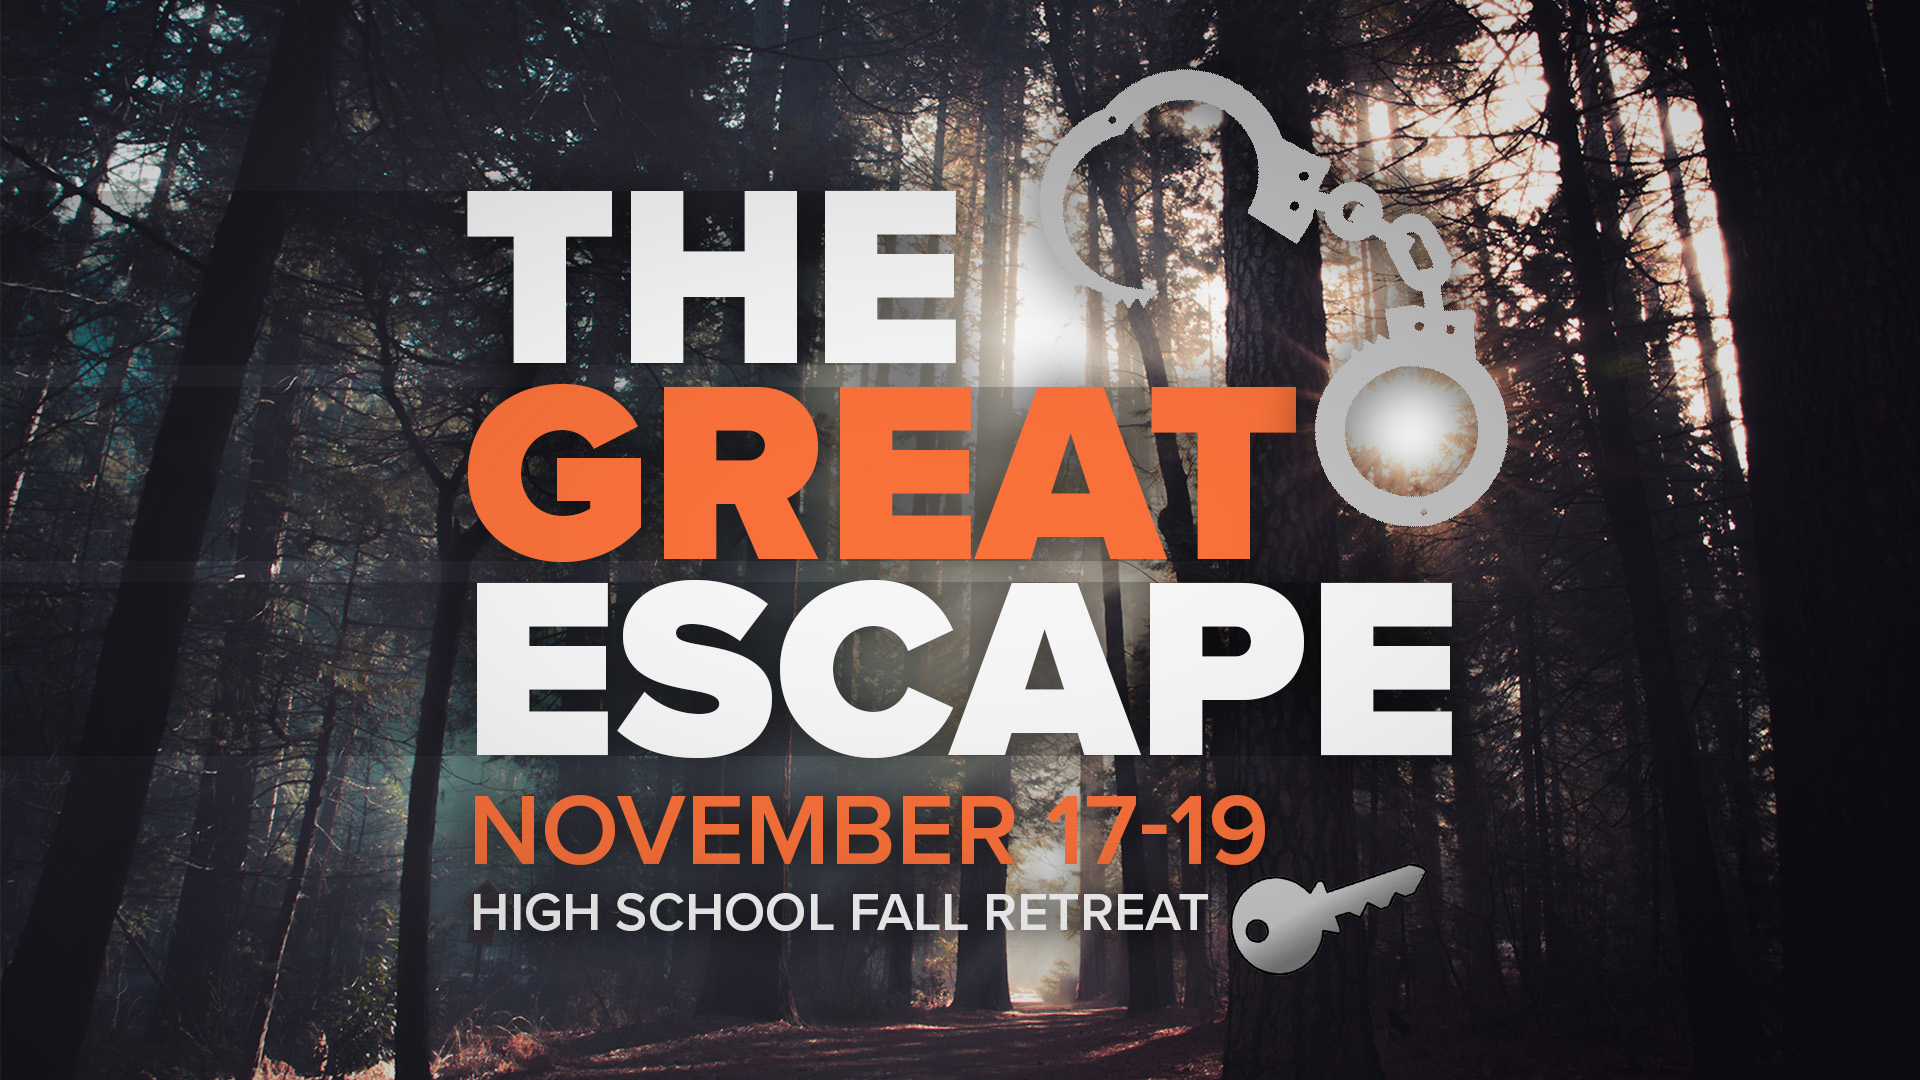 The Great Escape - High School Fall Retreat - November 17-19